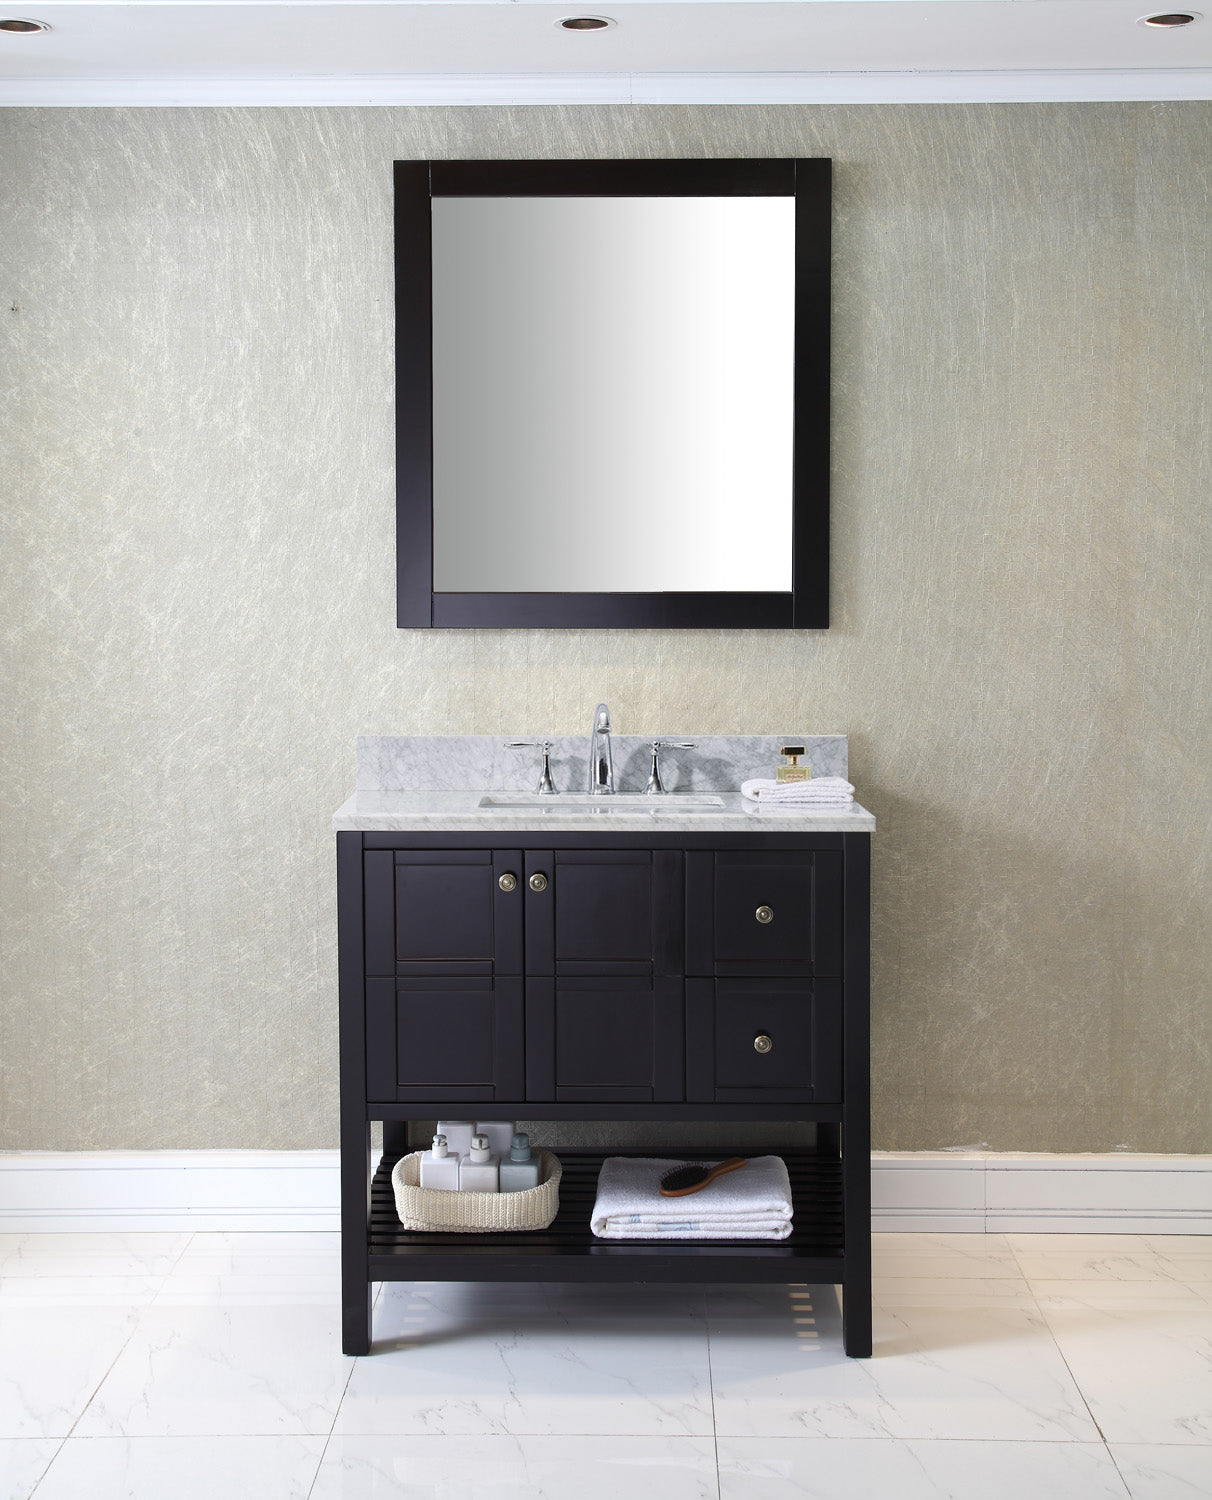 Virtu USA Winterfell 36" Single Bath Vanity in Espresso with Marble Top and Square Sink with Mirror - Luxe Bathroom Vanities Luxury Bathroom Fixtures Bathroom Furniture